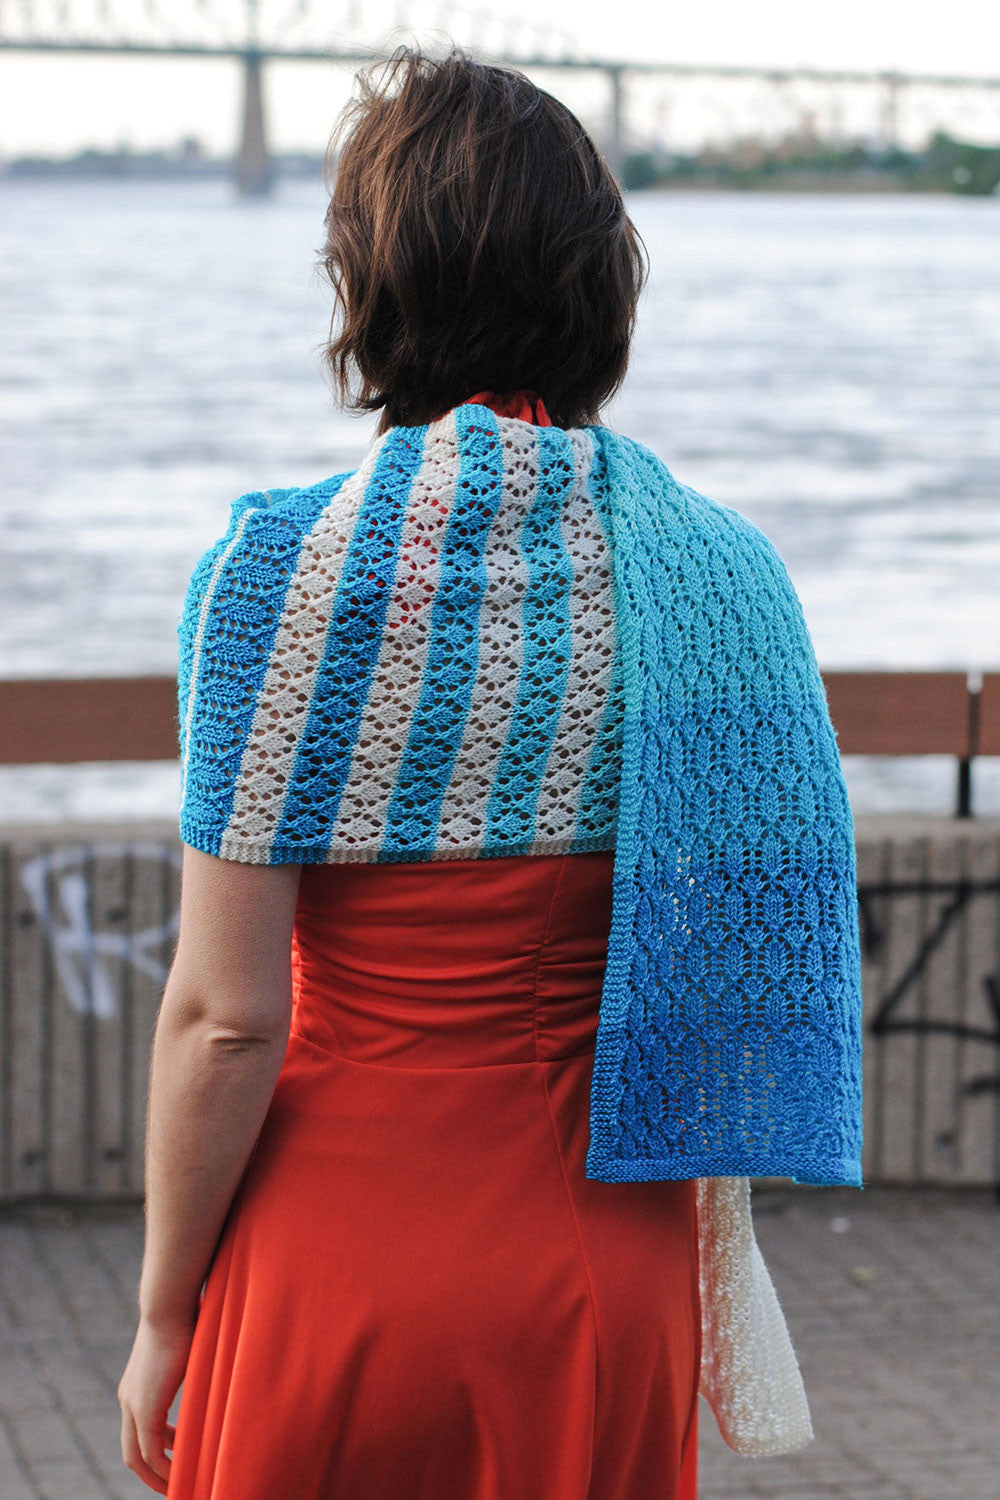 Devaneio gradient lace knitting pattern